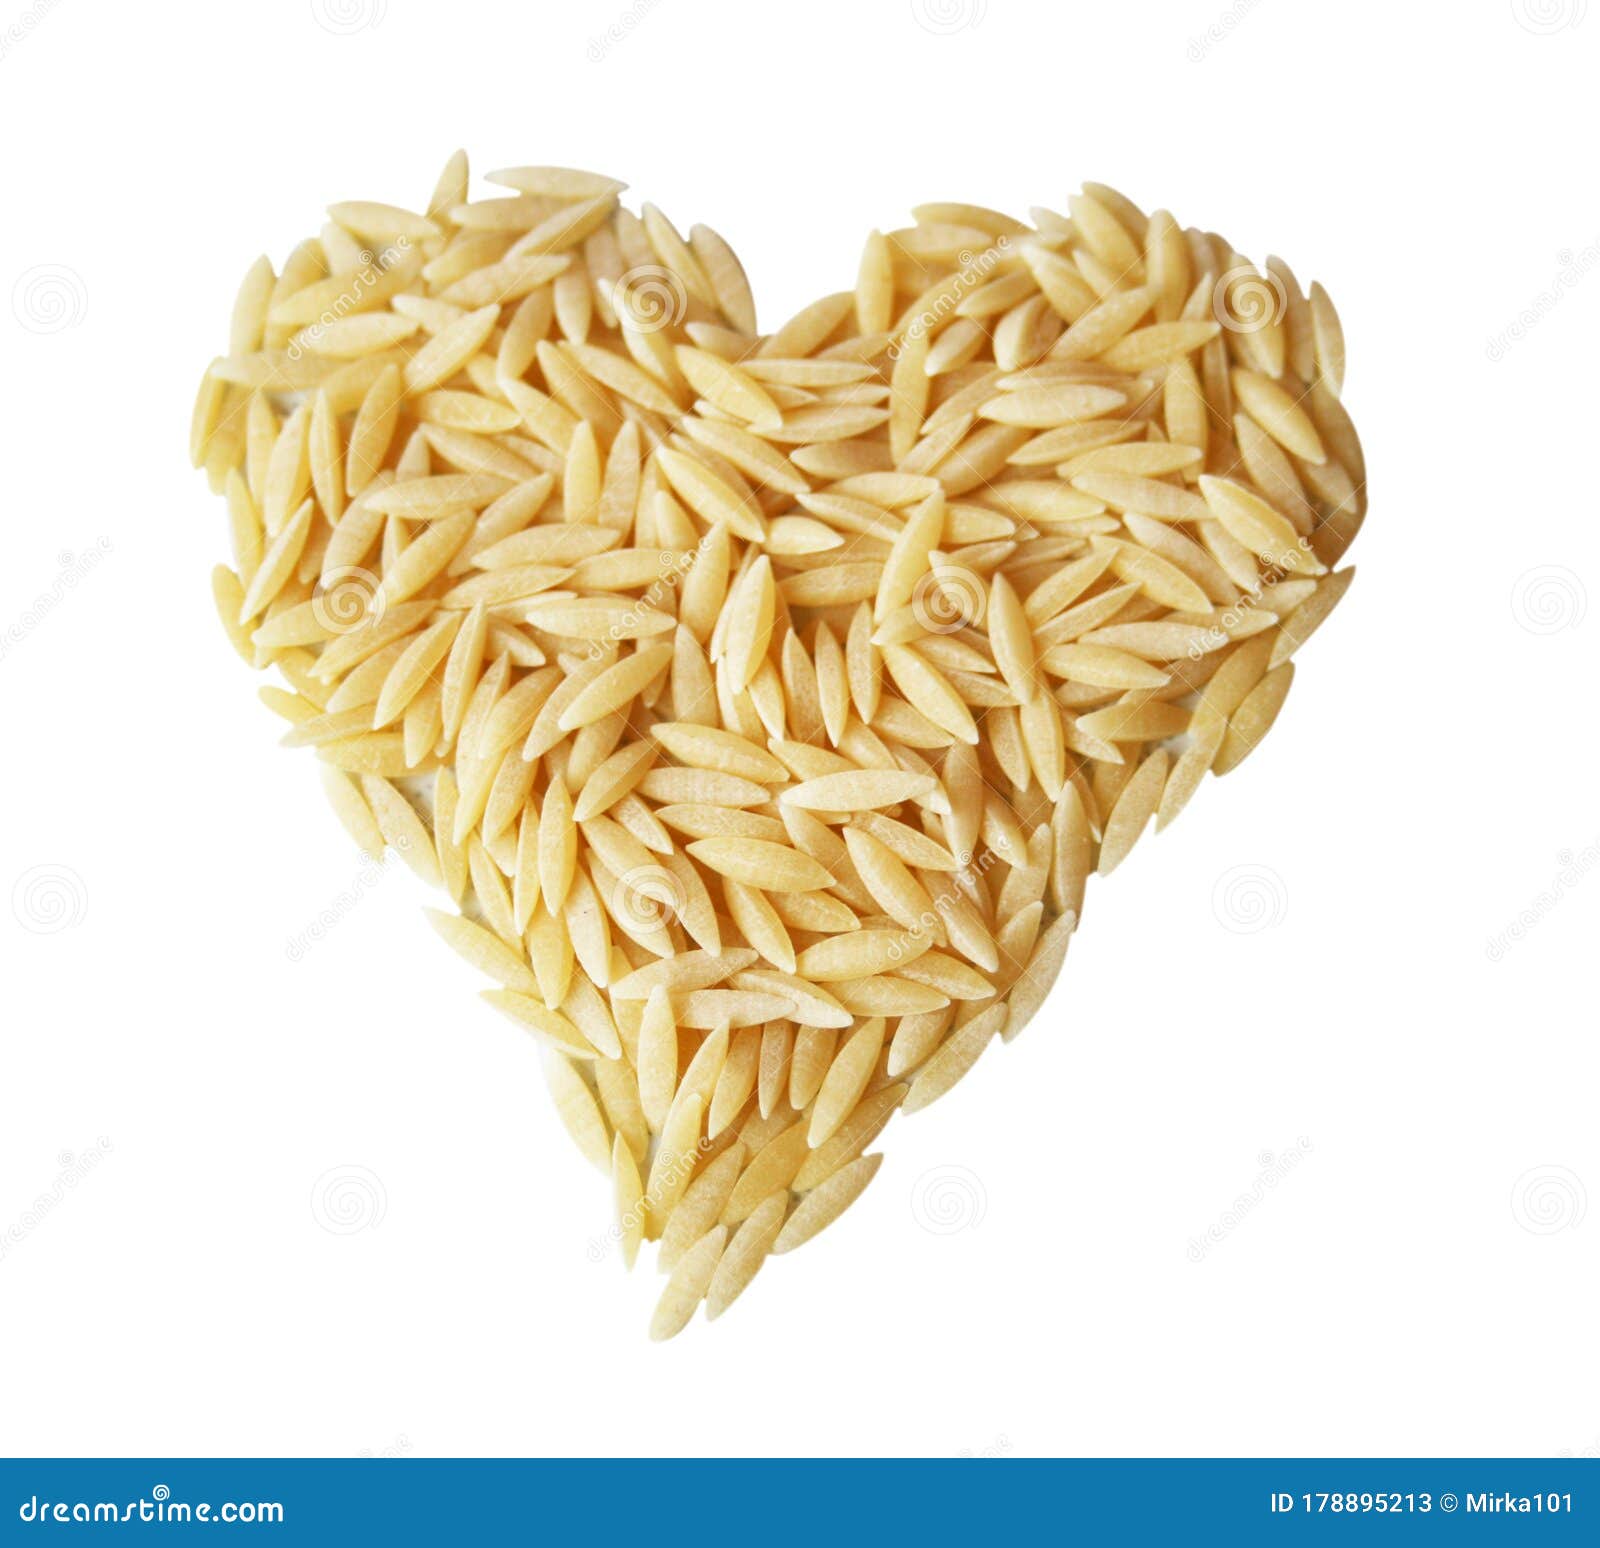 small pasta heart, rice-d pasta